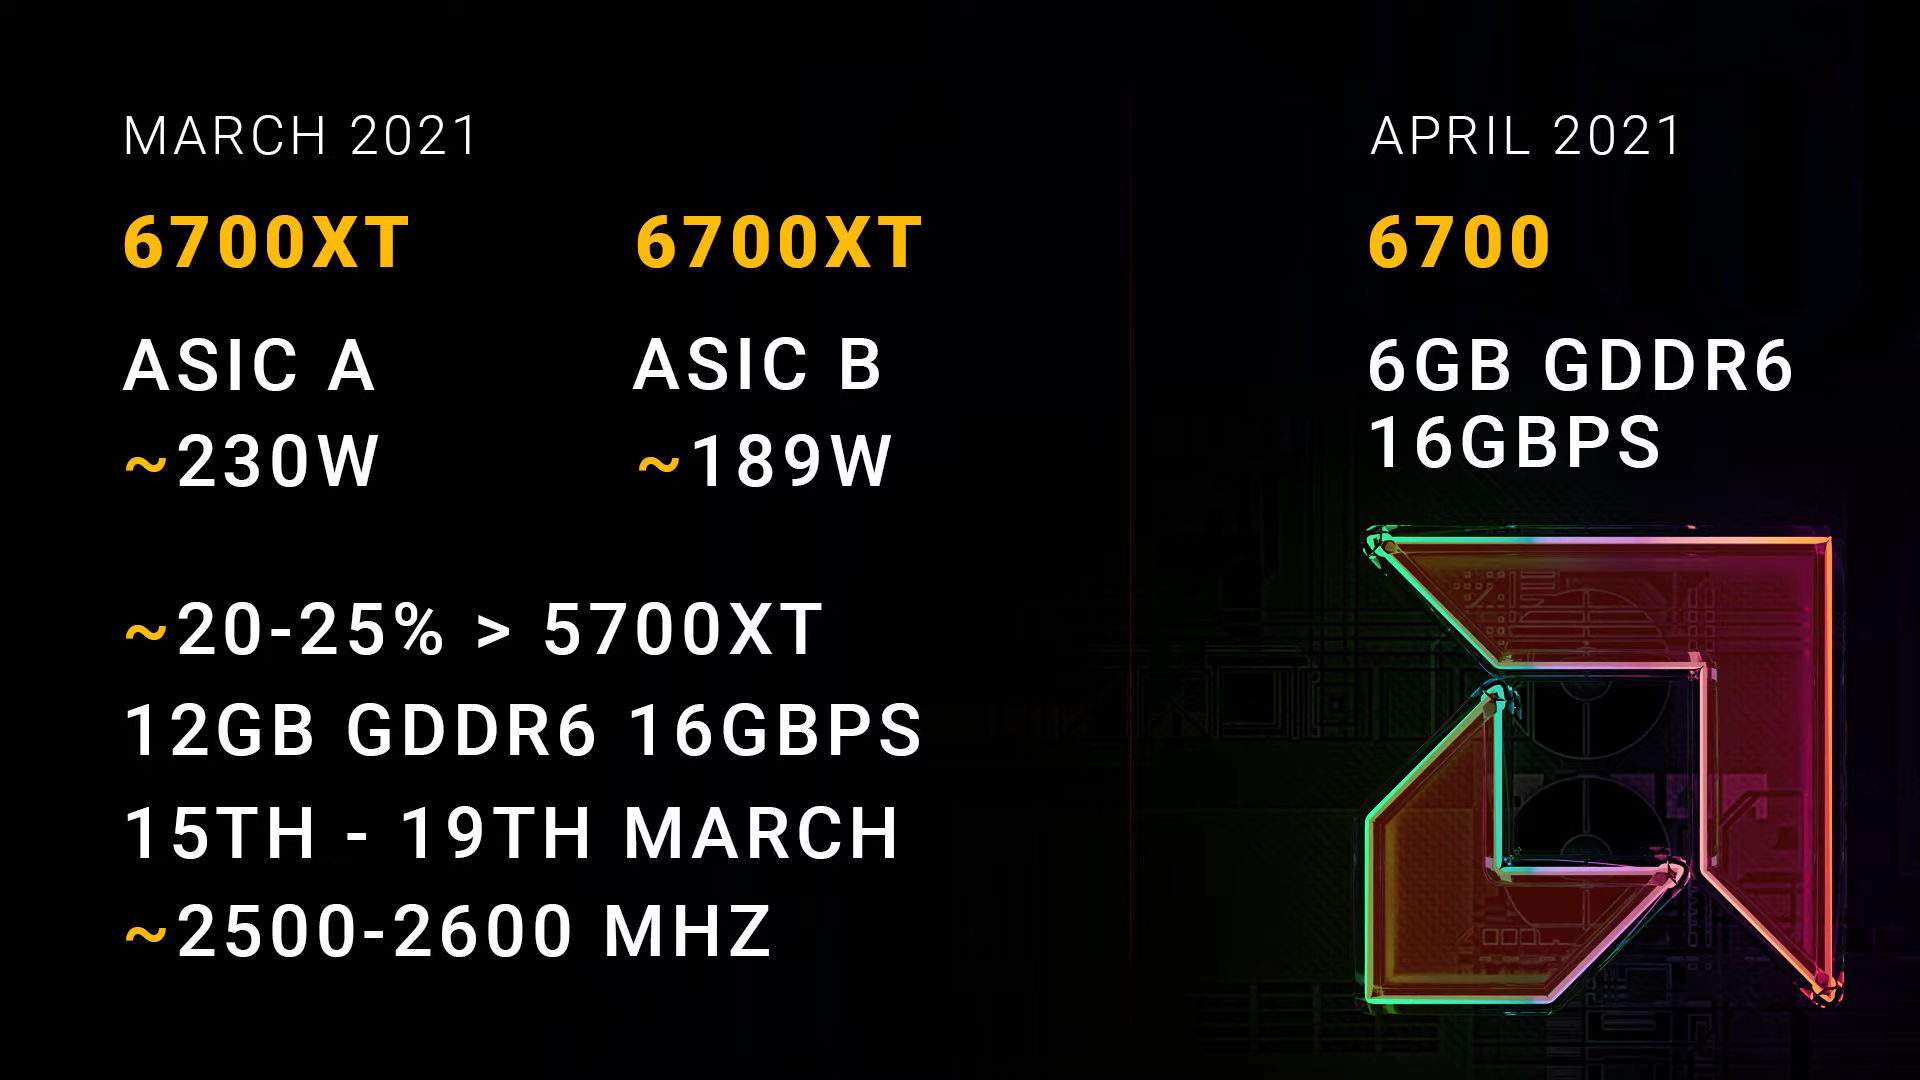 AMD Radeon RX 6700 XT Specs